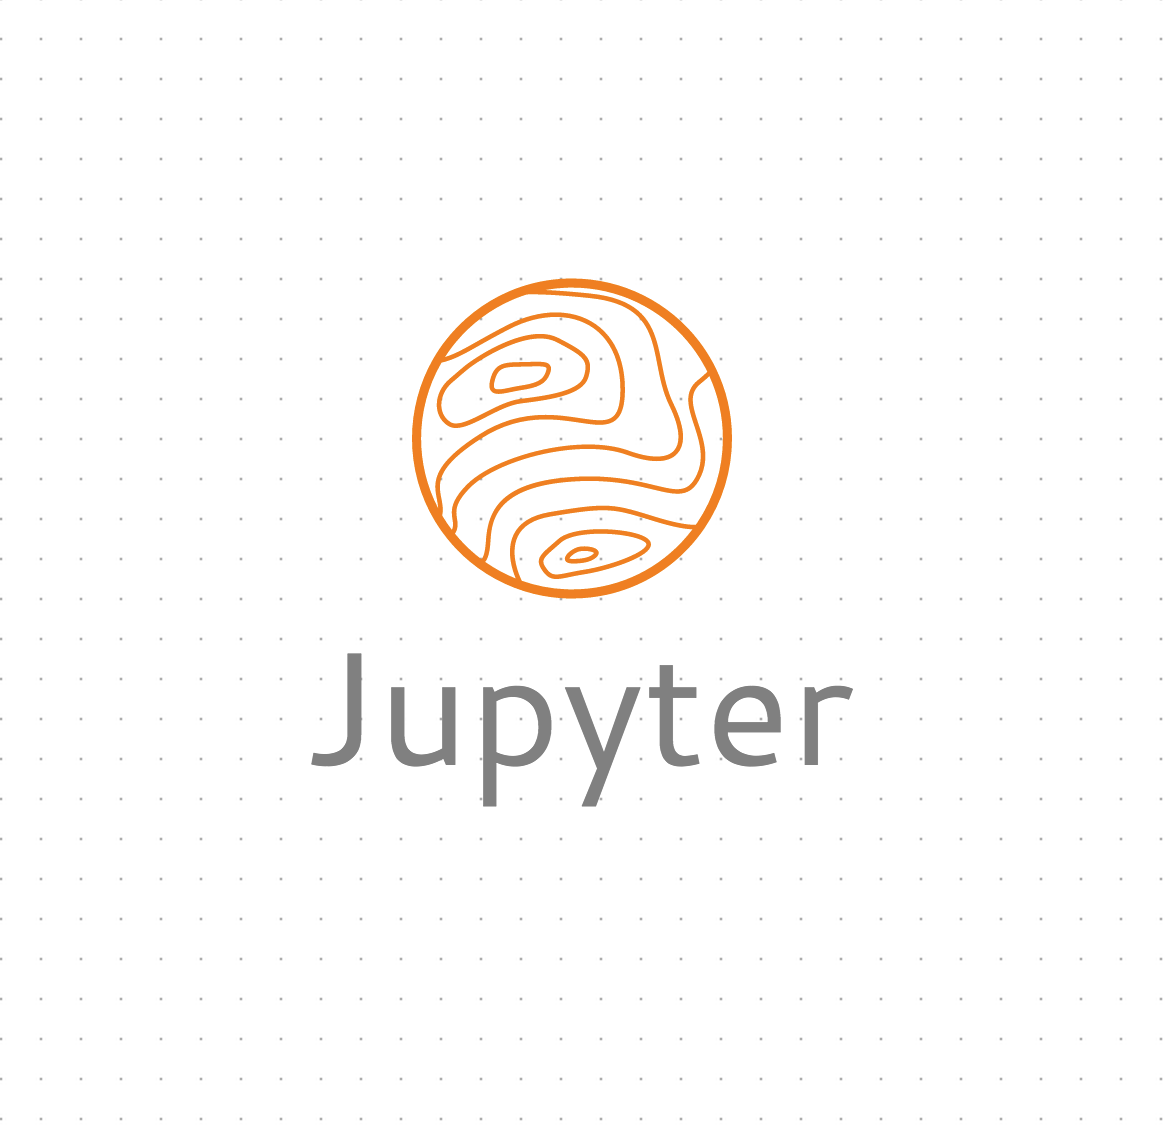 Jupyter Logo - WIP] Notebook design idea · Issue #10 · jupyter/design · GitHub